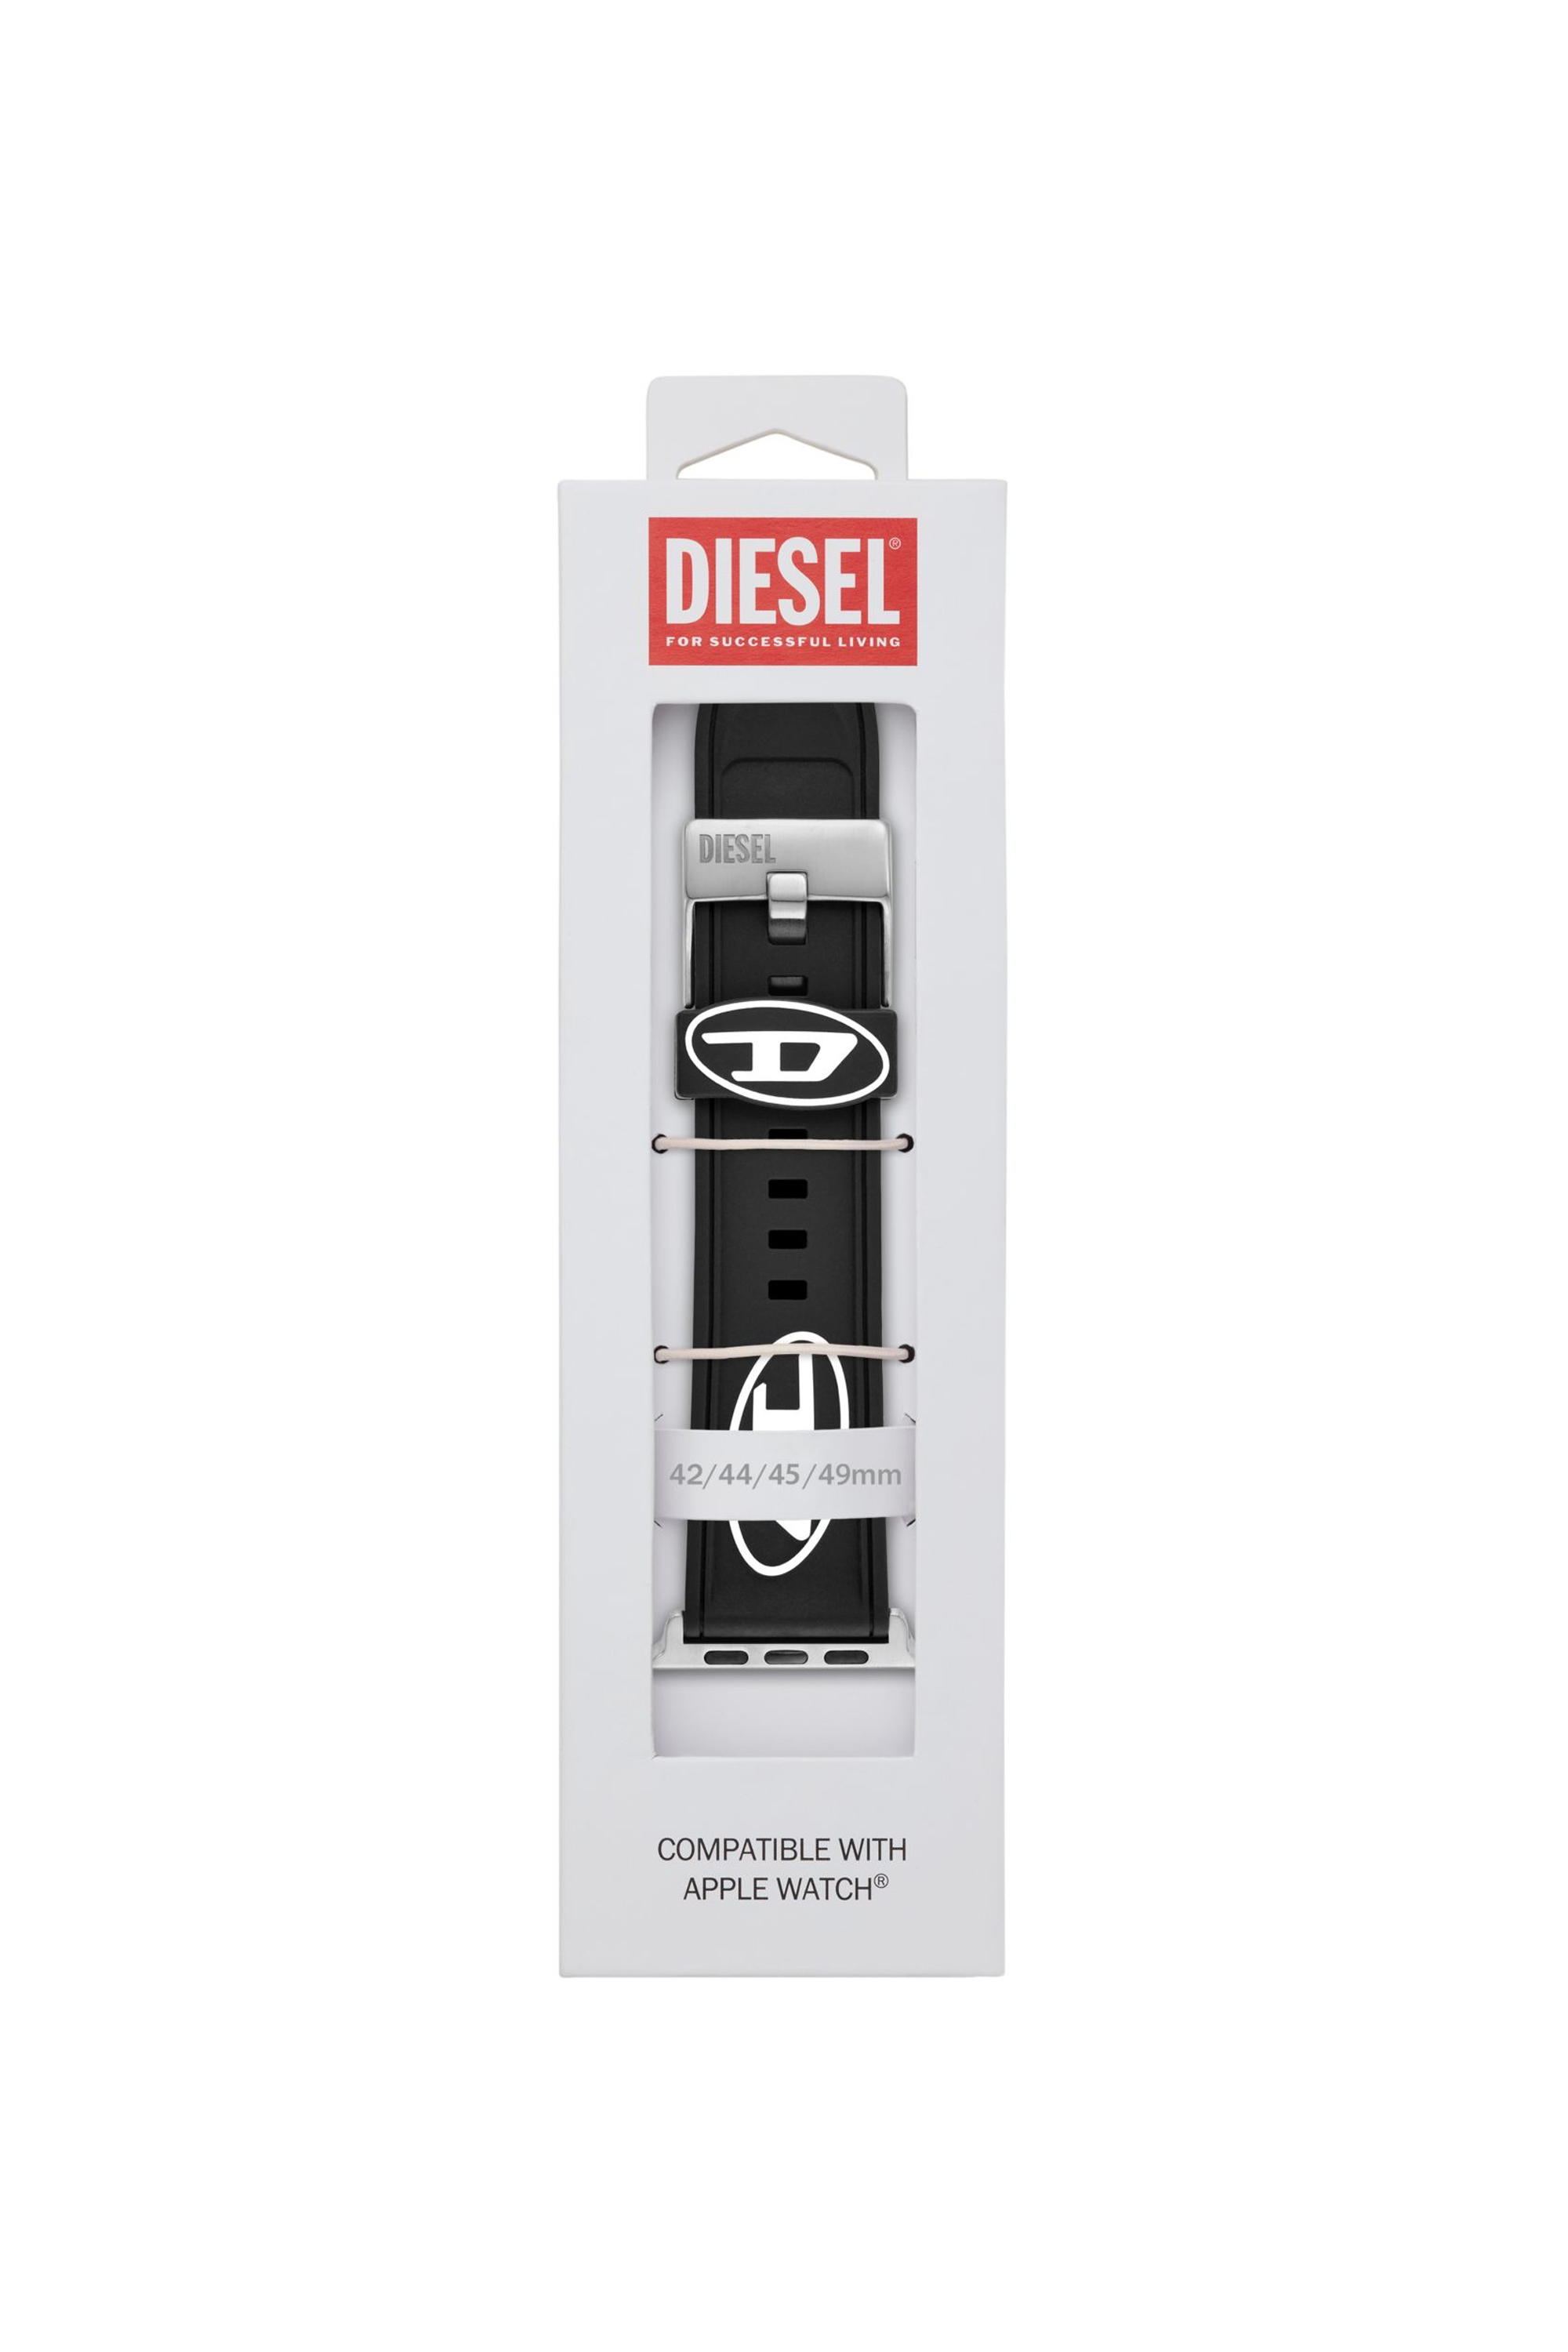 Diesel - DSS0018, Uomo Cinturino in silicone per Apple watch®, 42/44/45/49mm in Nero - Image 3